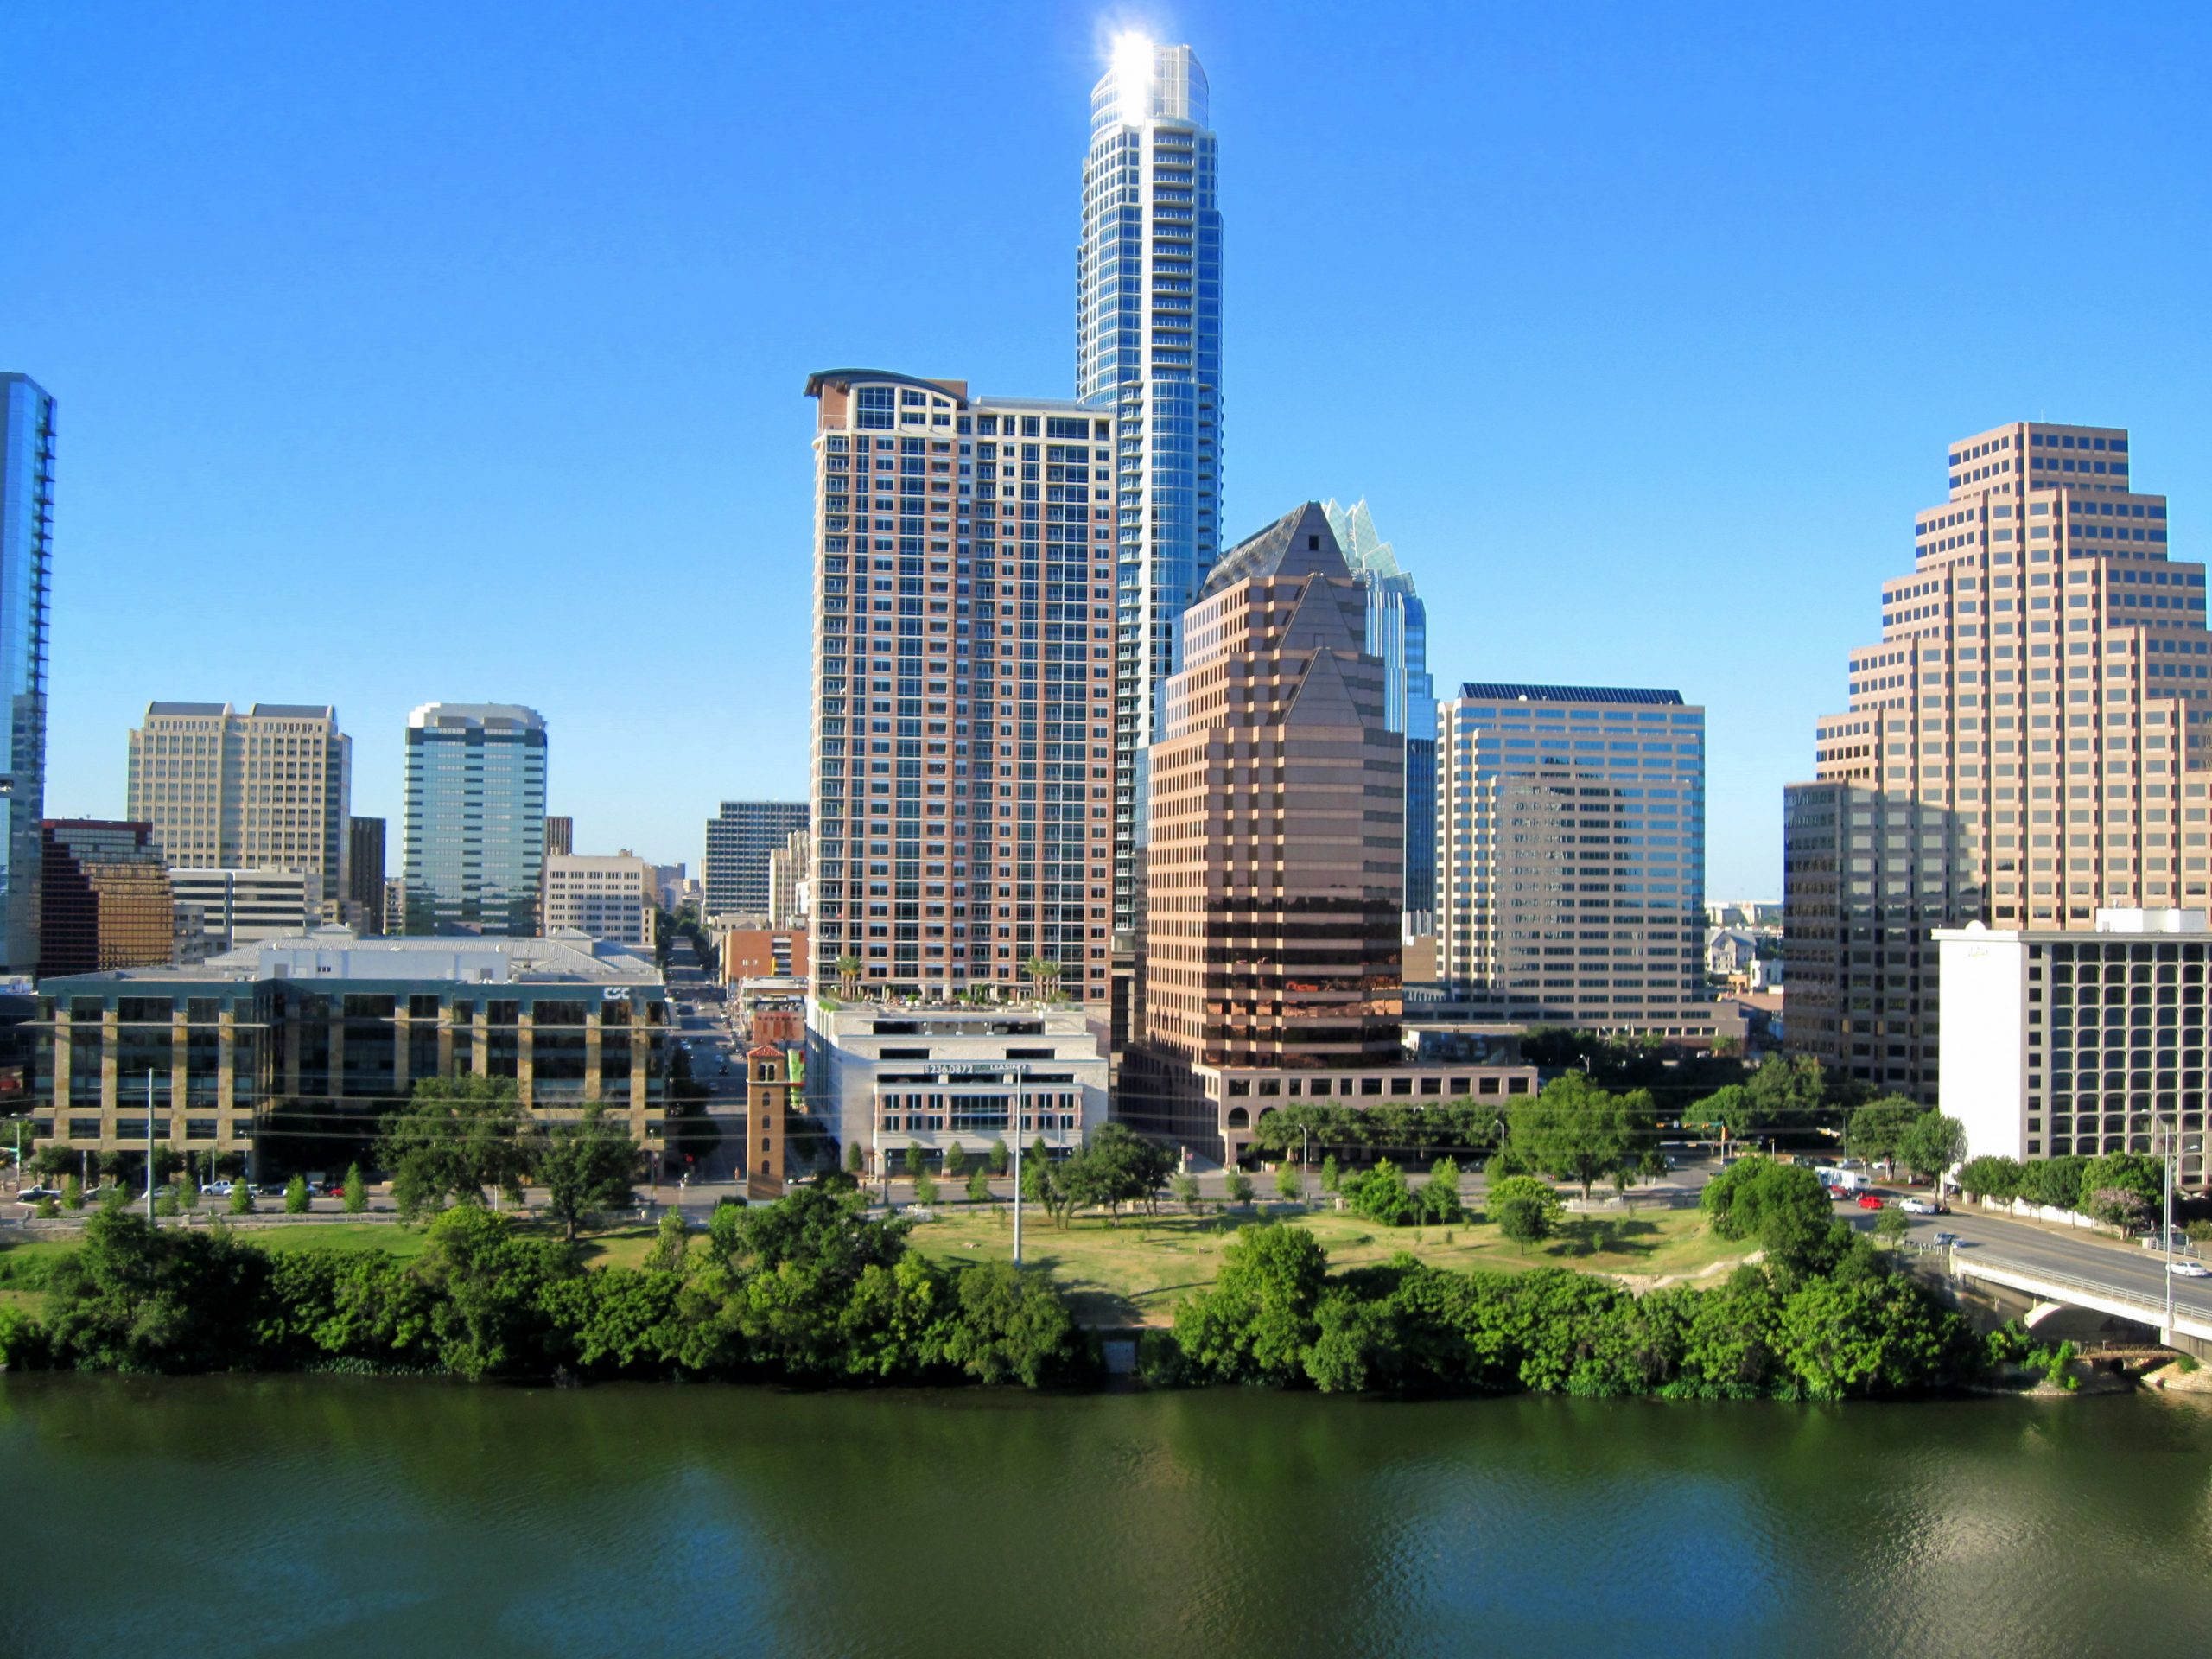 Photo of the skyline of Austin, Texas